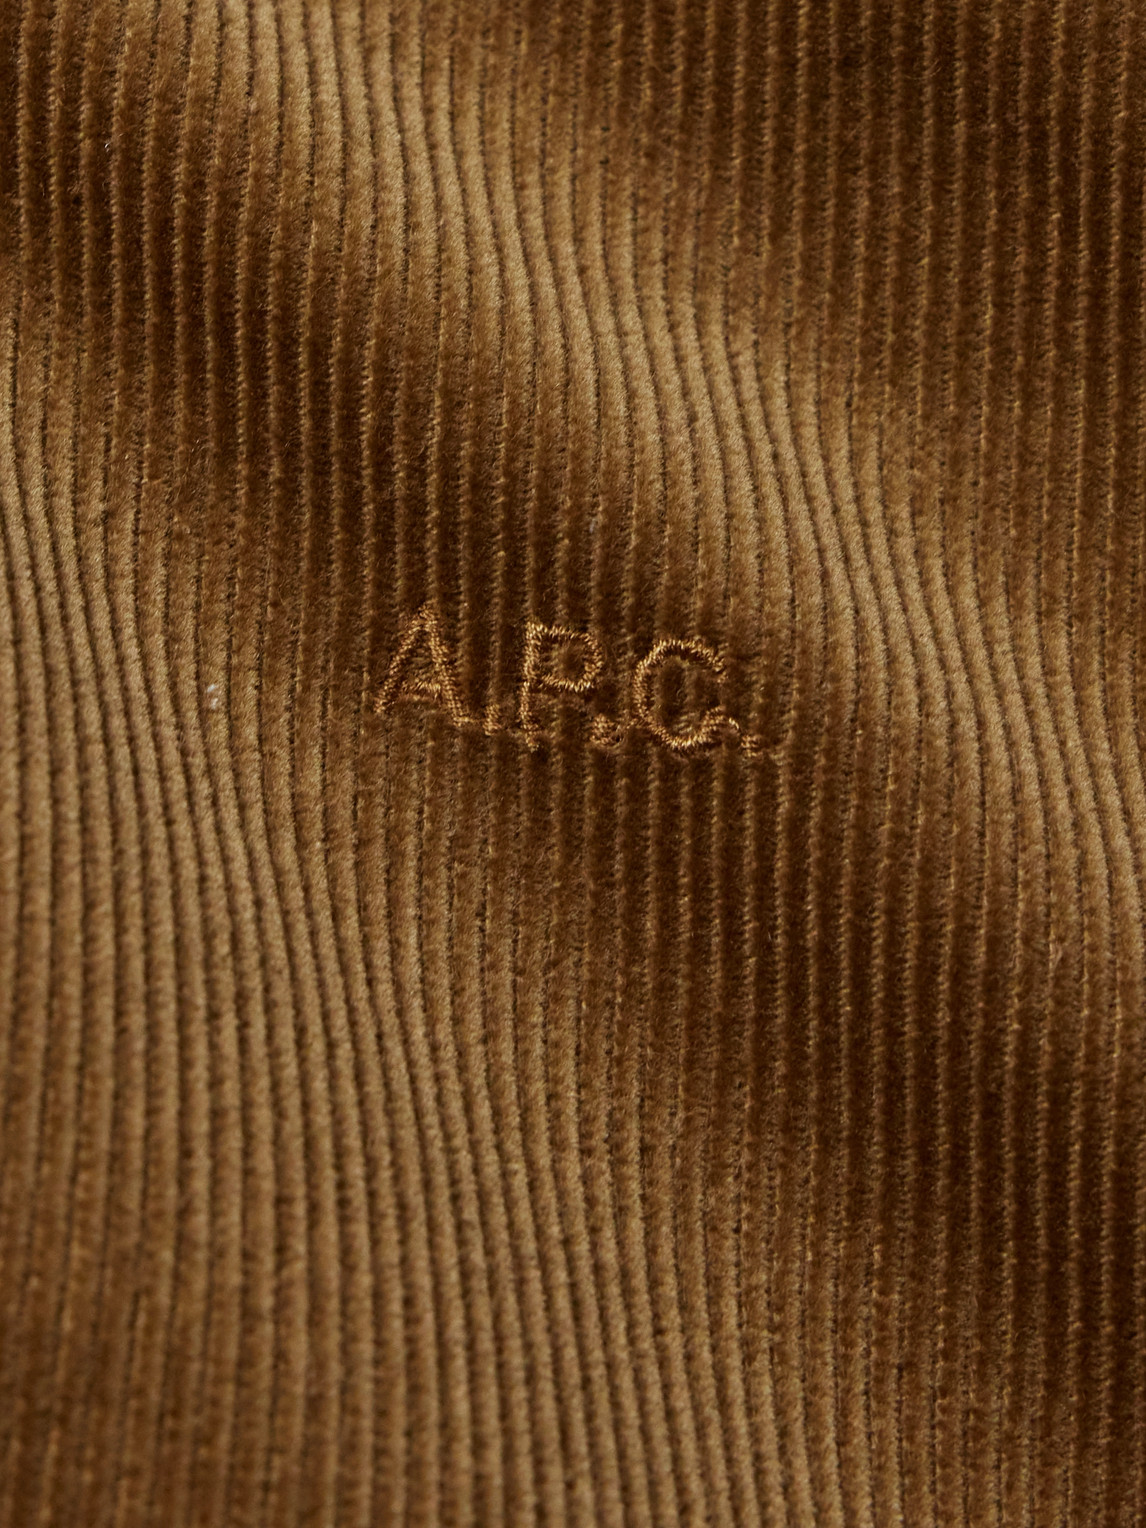 Shop Apc Gilles Logo-embroidered Cotton-corduroy Jacket In Brown